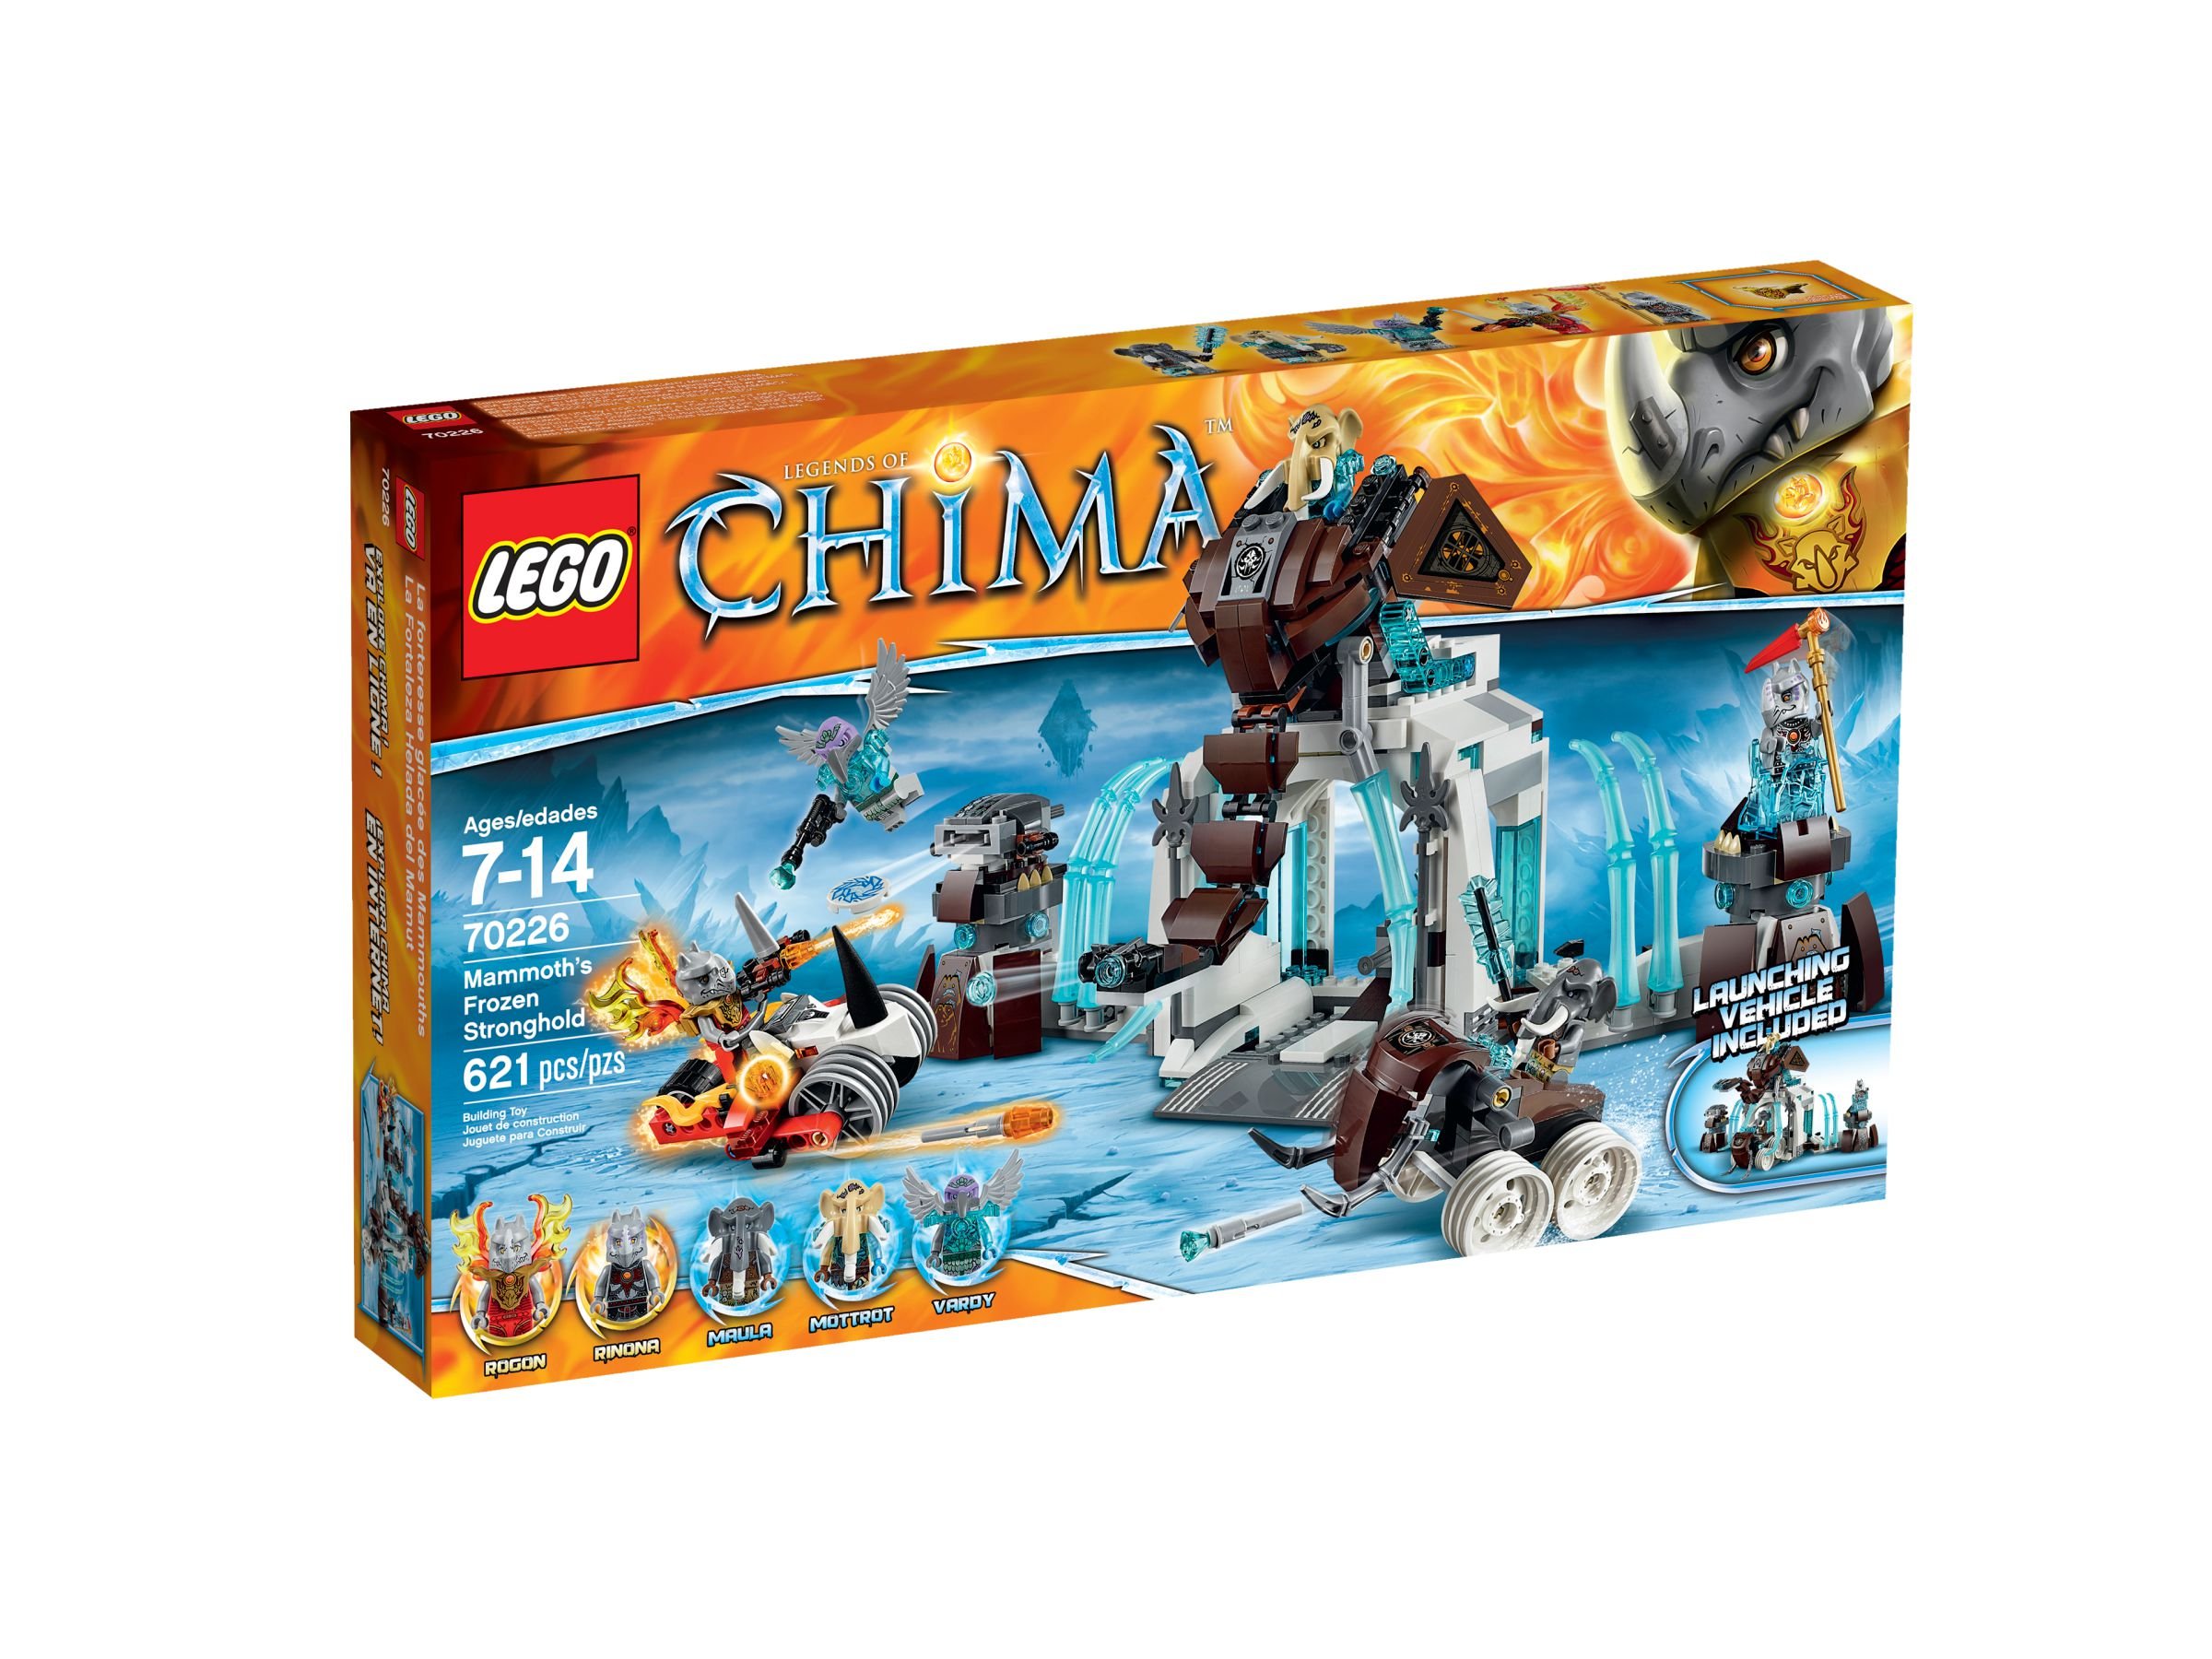 LEGO Legends Of Chima 70226 Die Eisfestung der Mammuts LEGO_70226_alt1.jpg